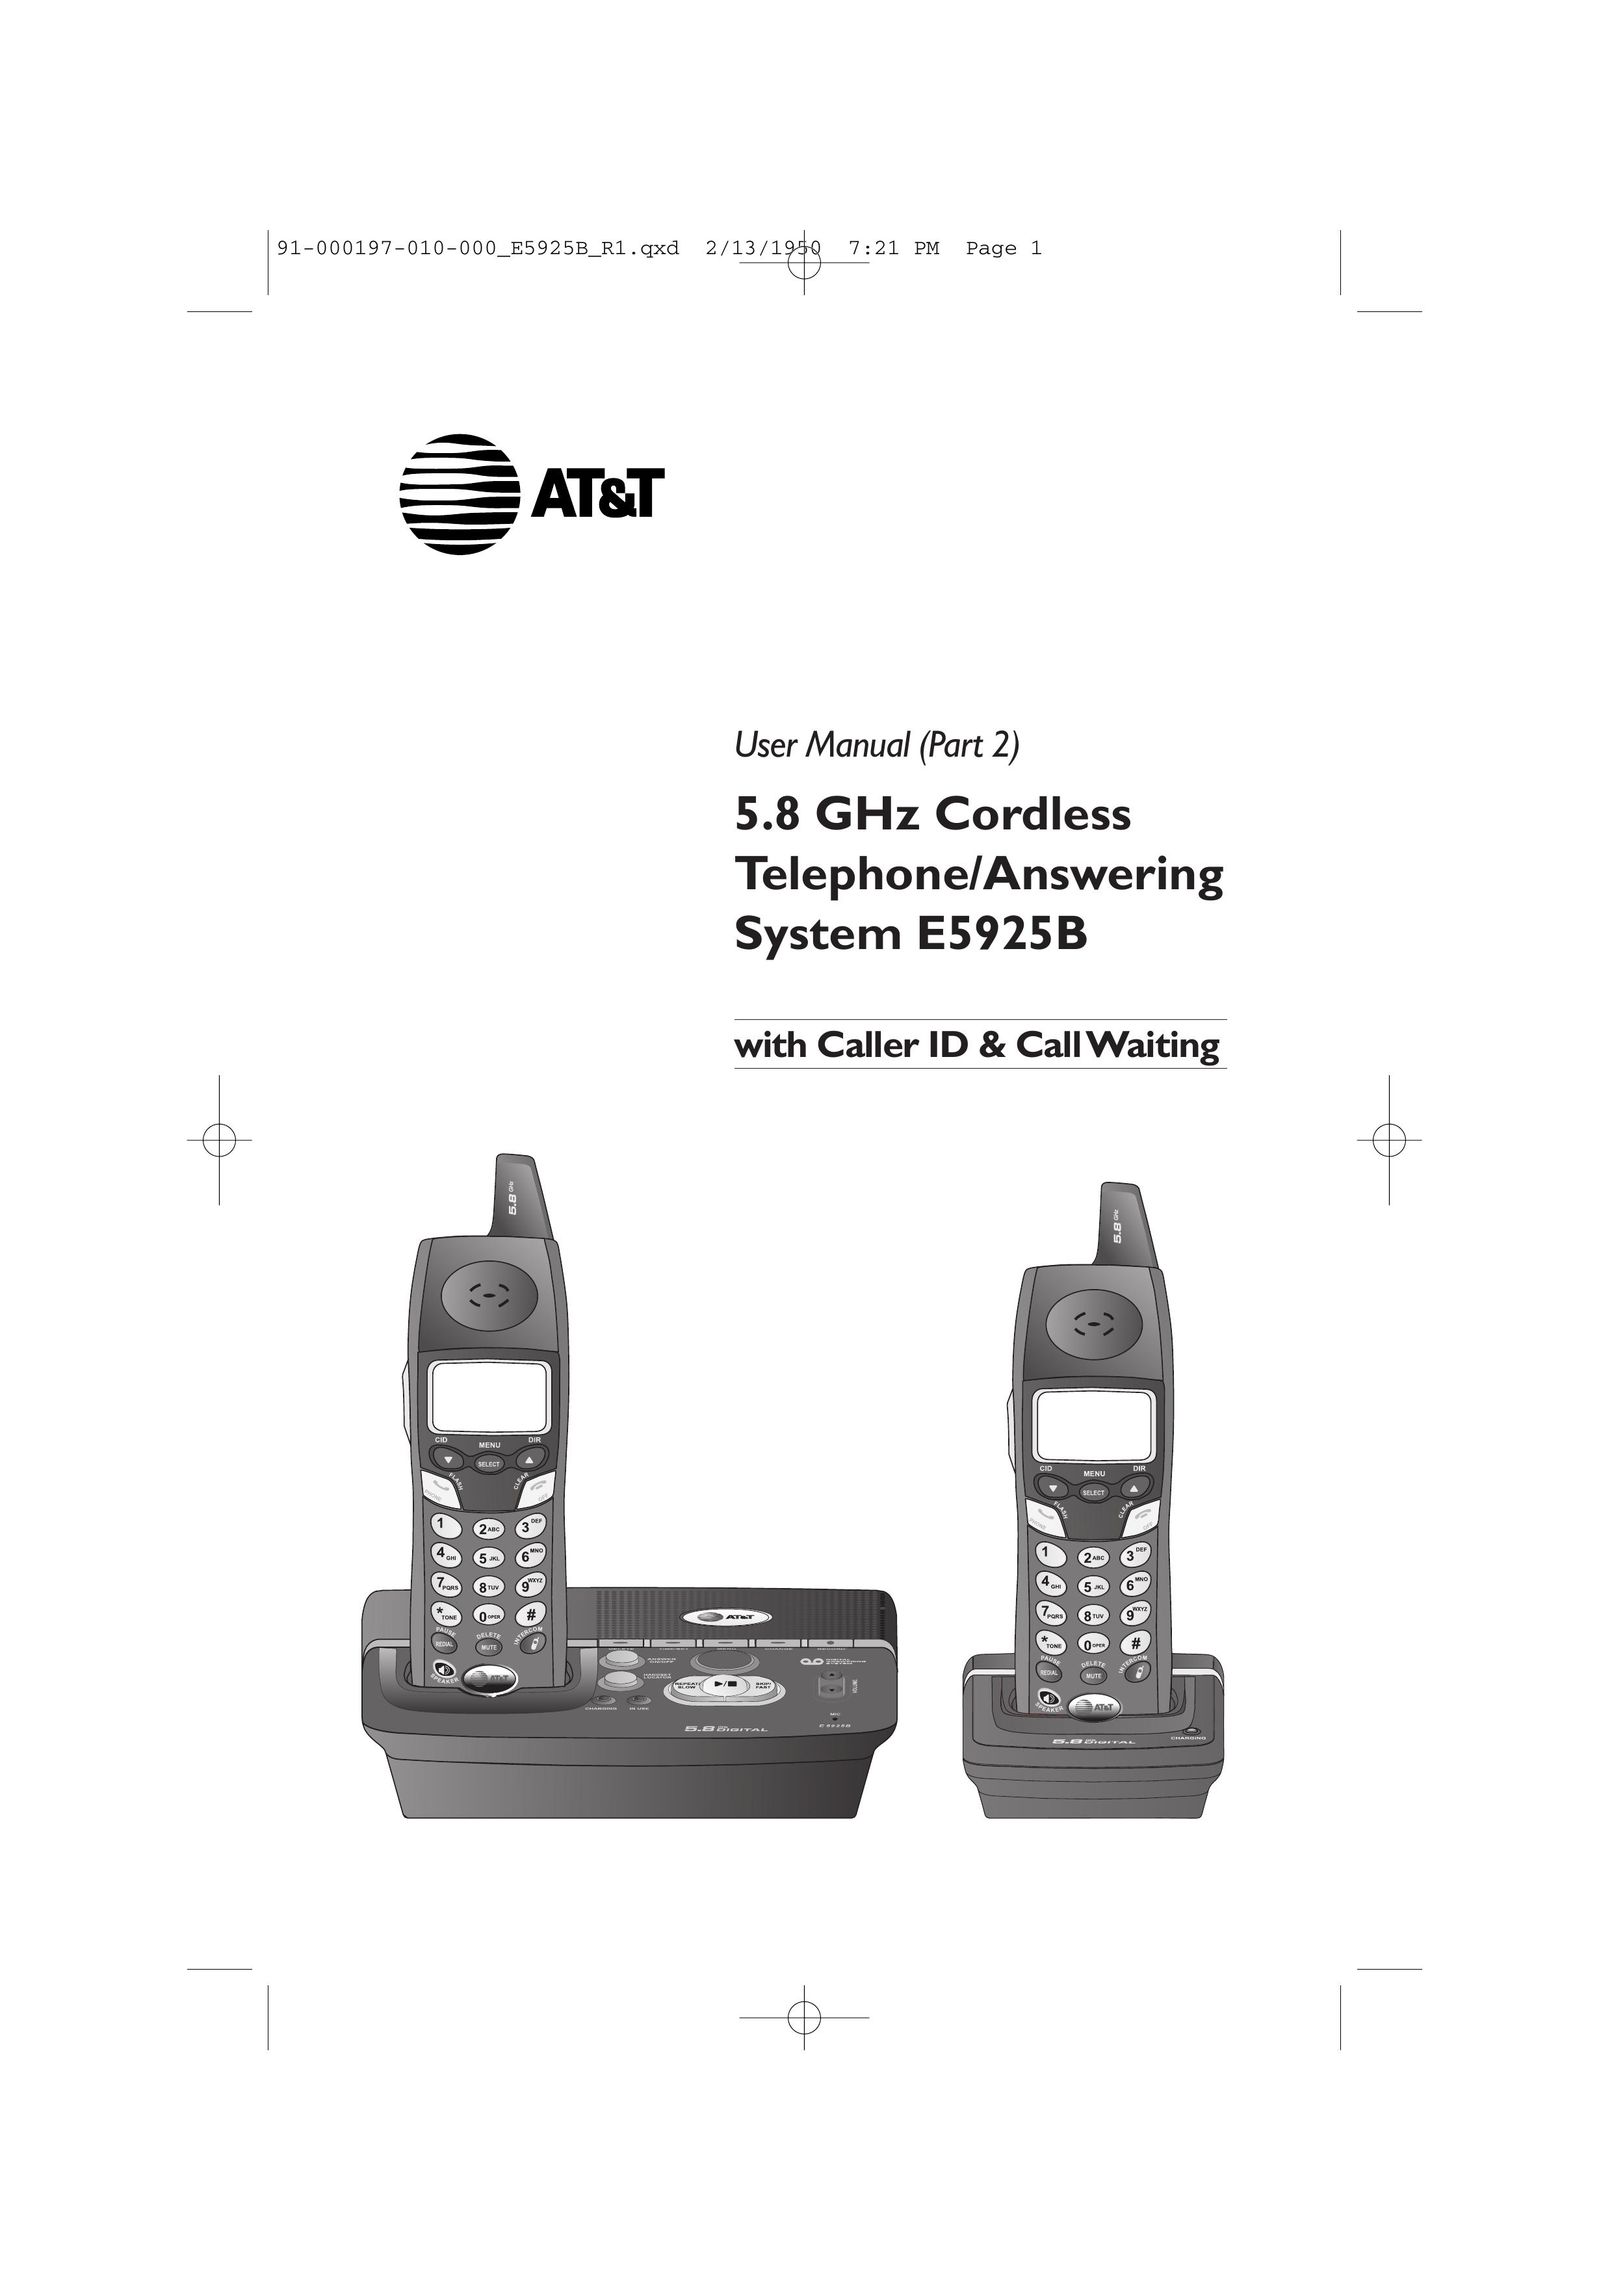 AT&T E5925B Answering Machine User Manual